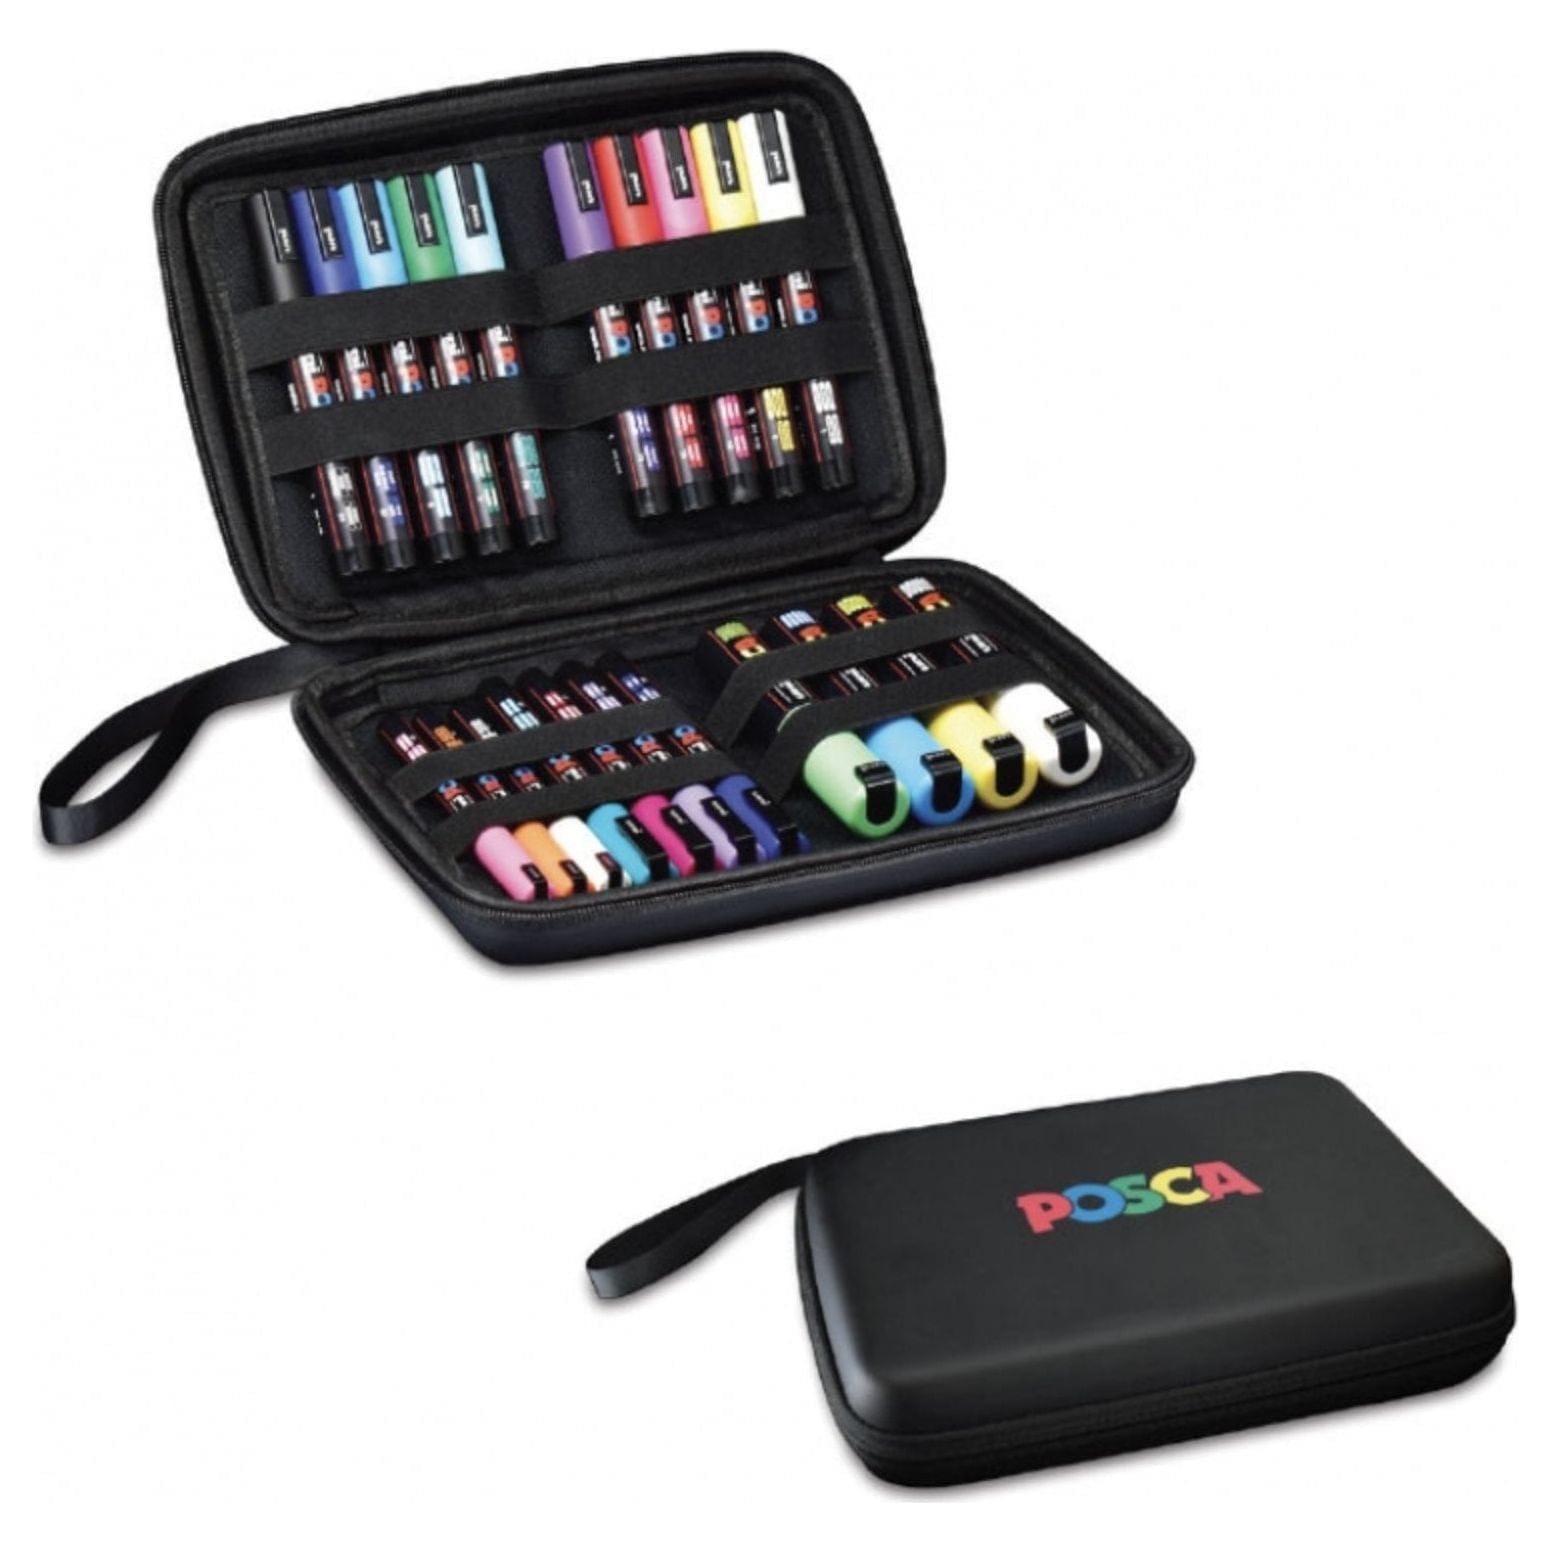 Posca Paint Pen - Pastel set of 8 – ART QUILT SUPPLIES - 2 Sew